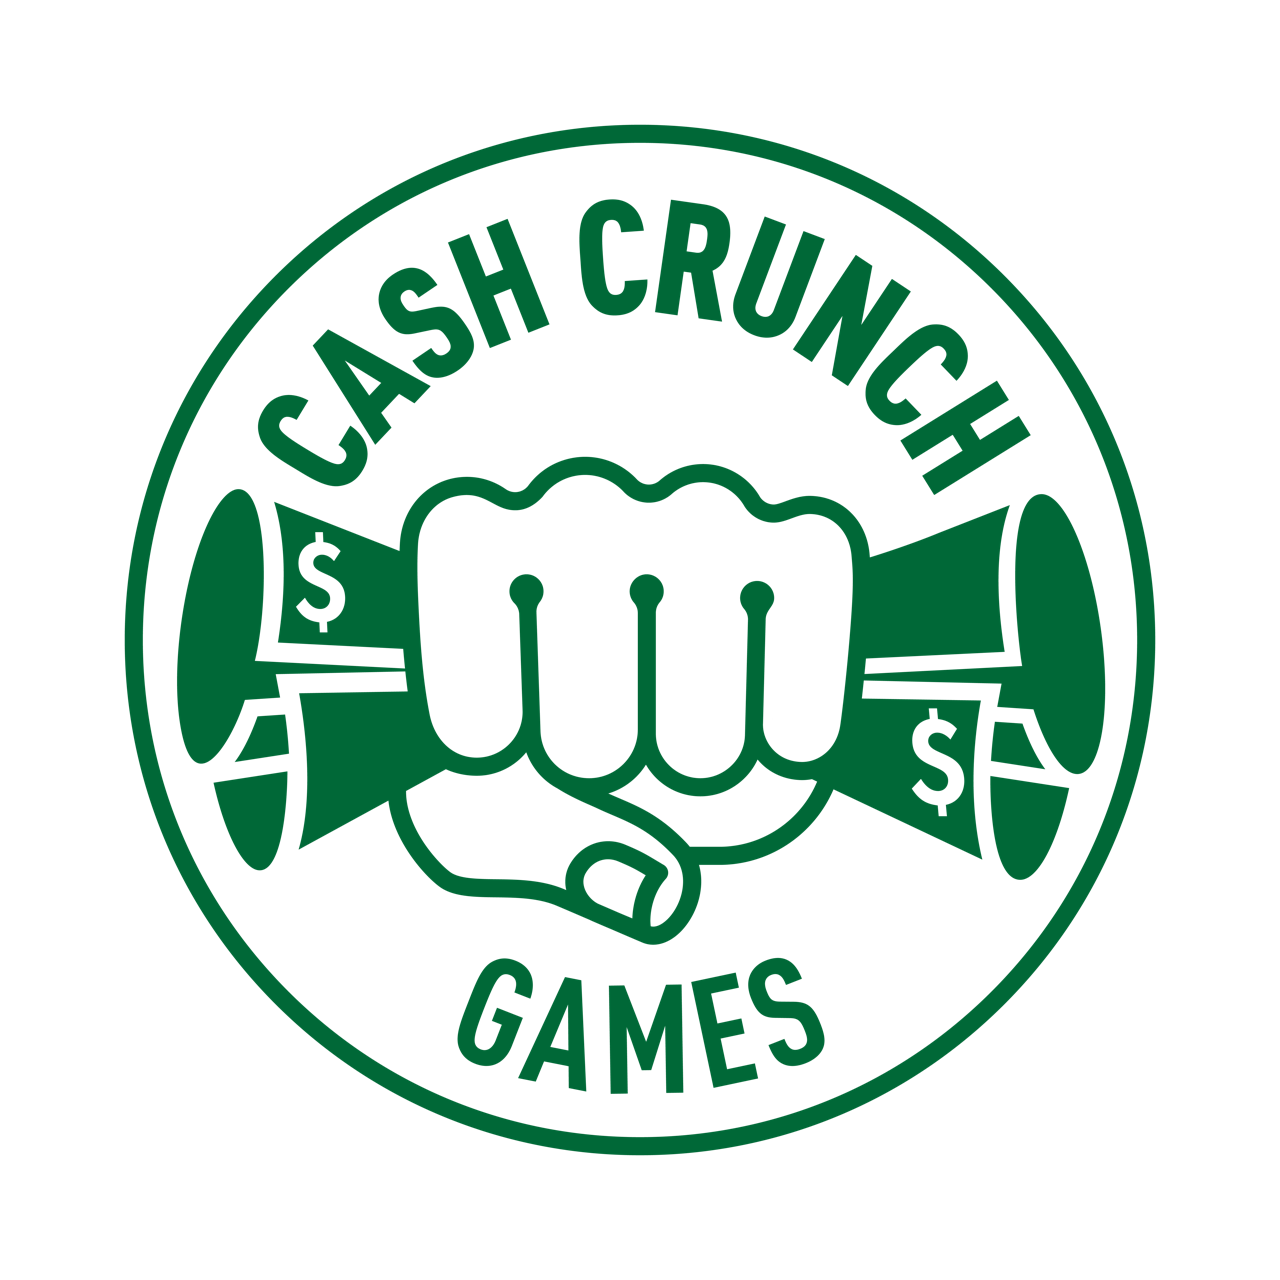 Finance Games Logo - Games for kids | CashCrunch Games